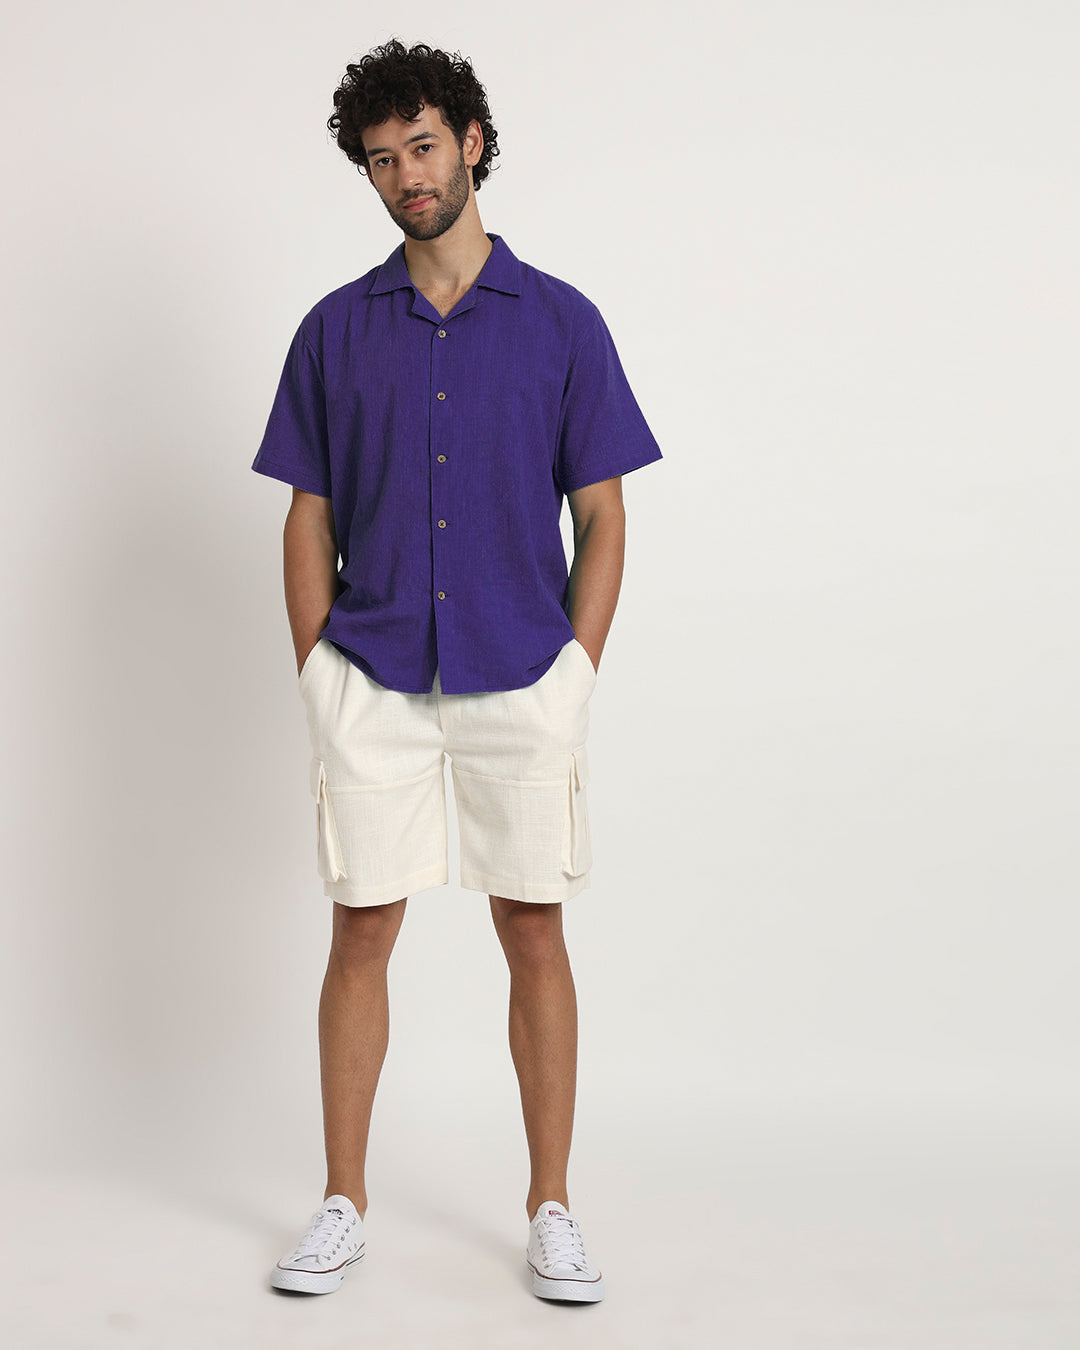 Combo: Classic Aurora Purple Half Sleeves Men's Shirt & Cargo Shorts